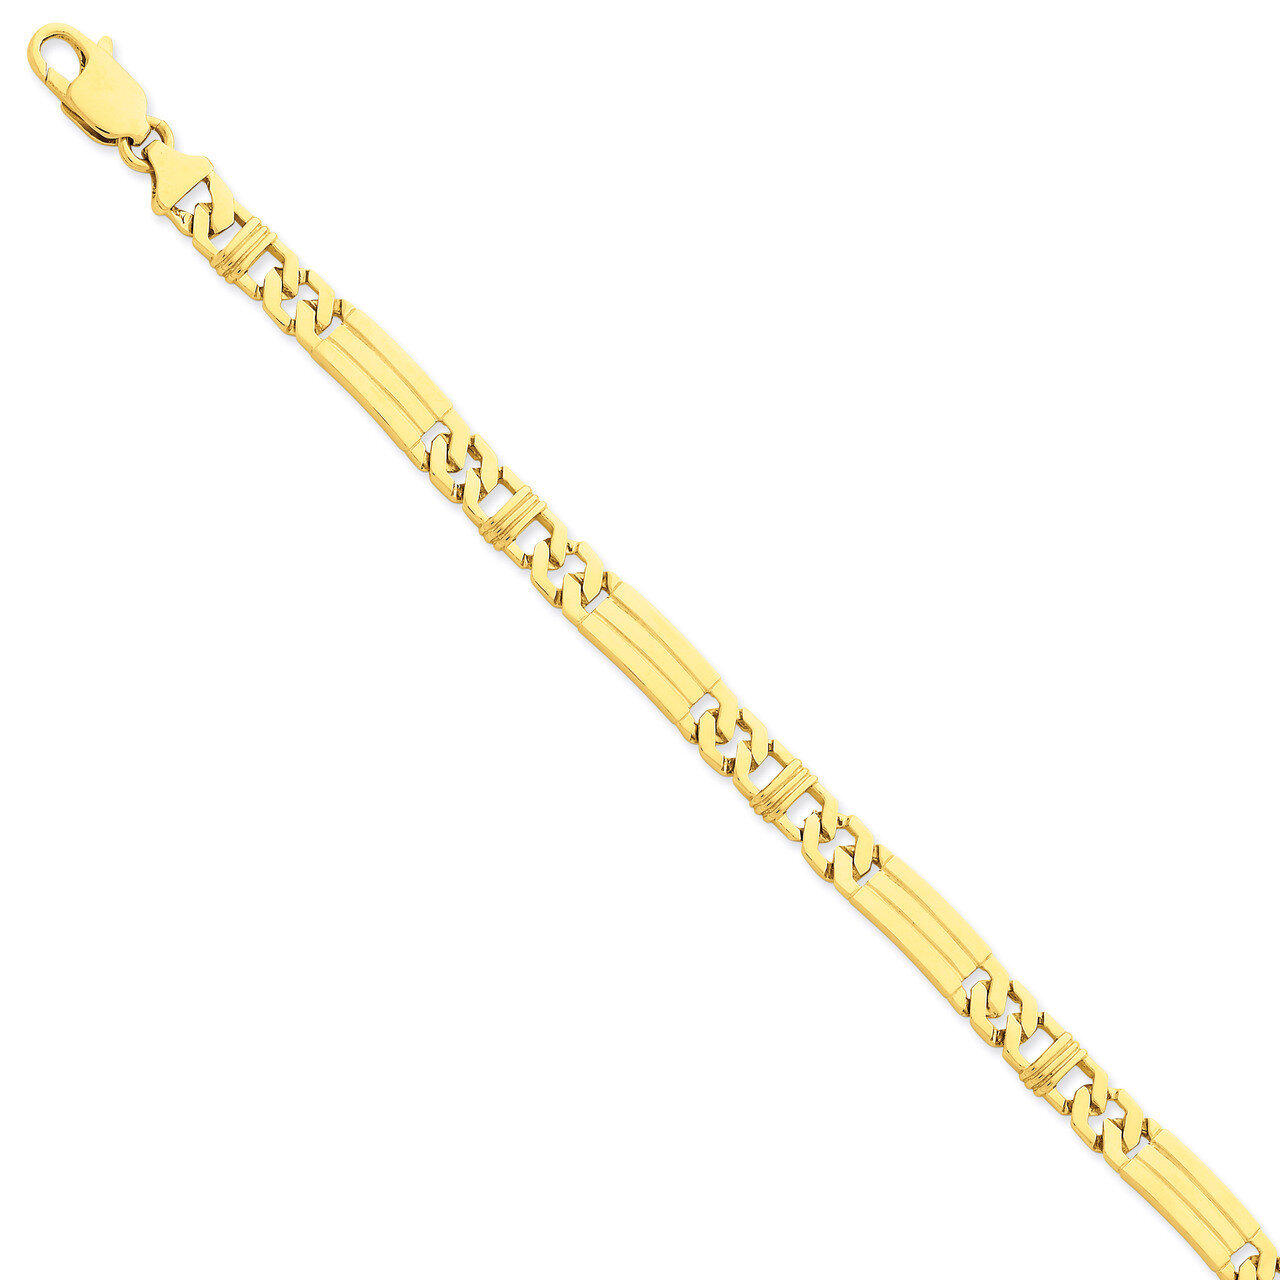 7mm Hand-Polished Fancy Link Chain 22 Inch 14k Gold LK201-22